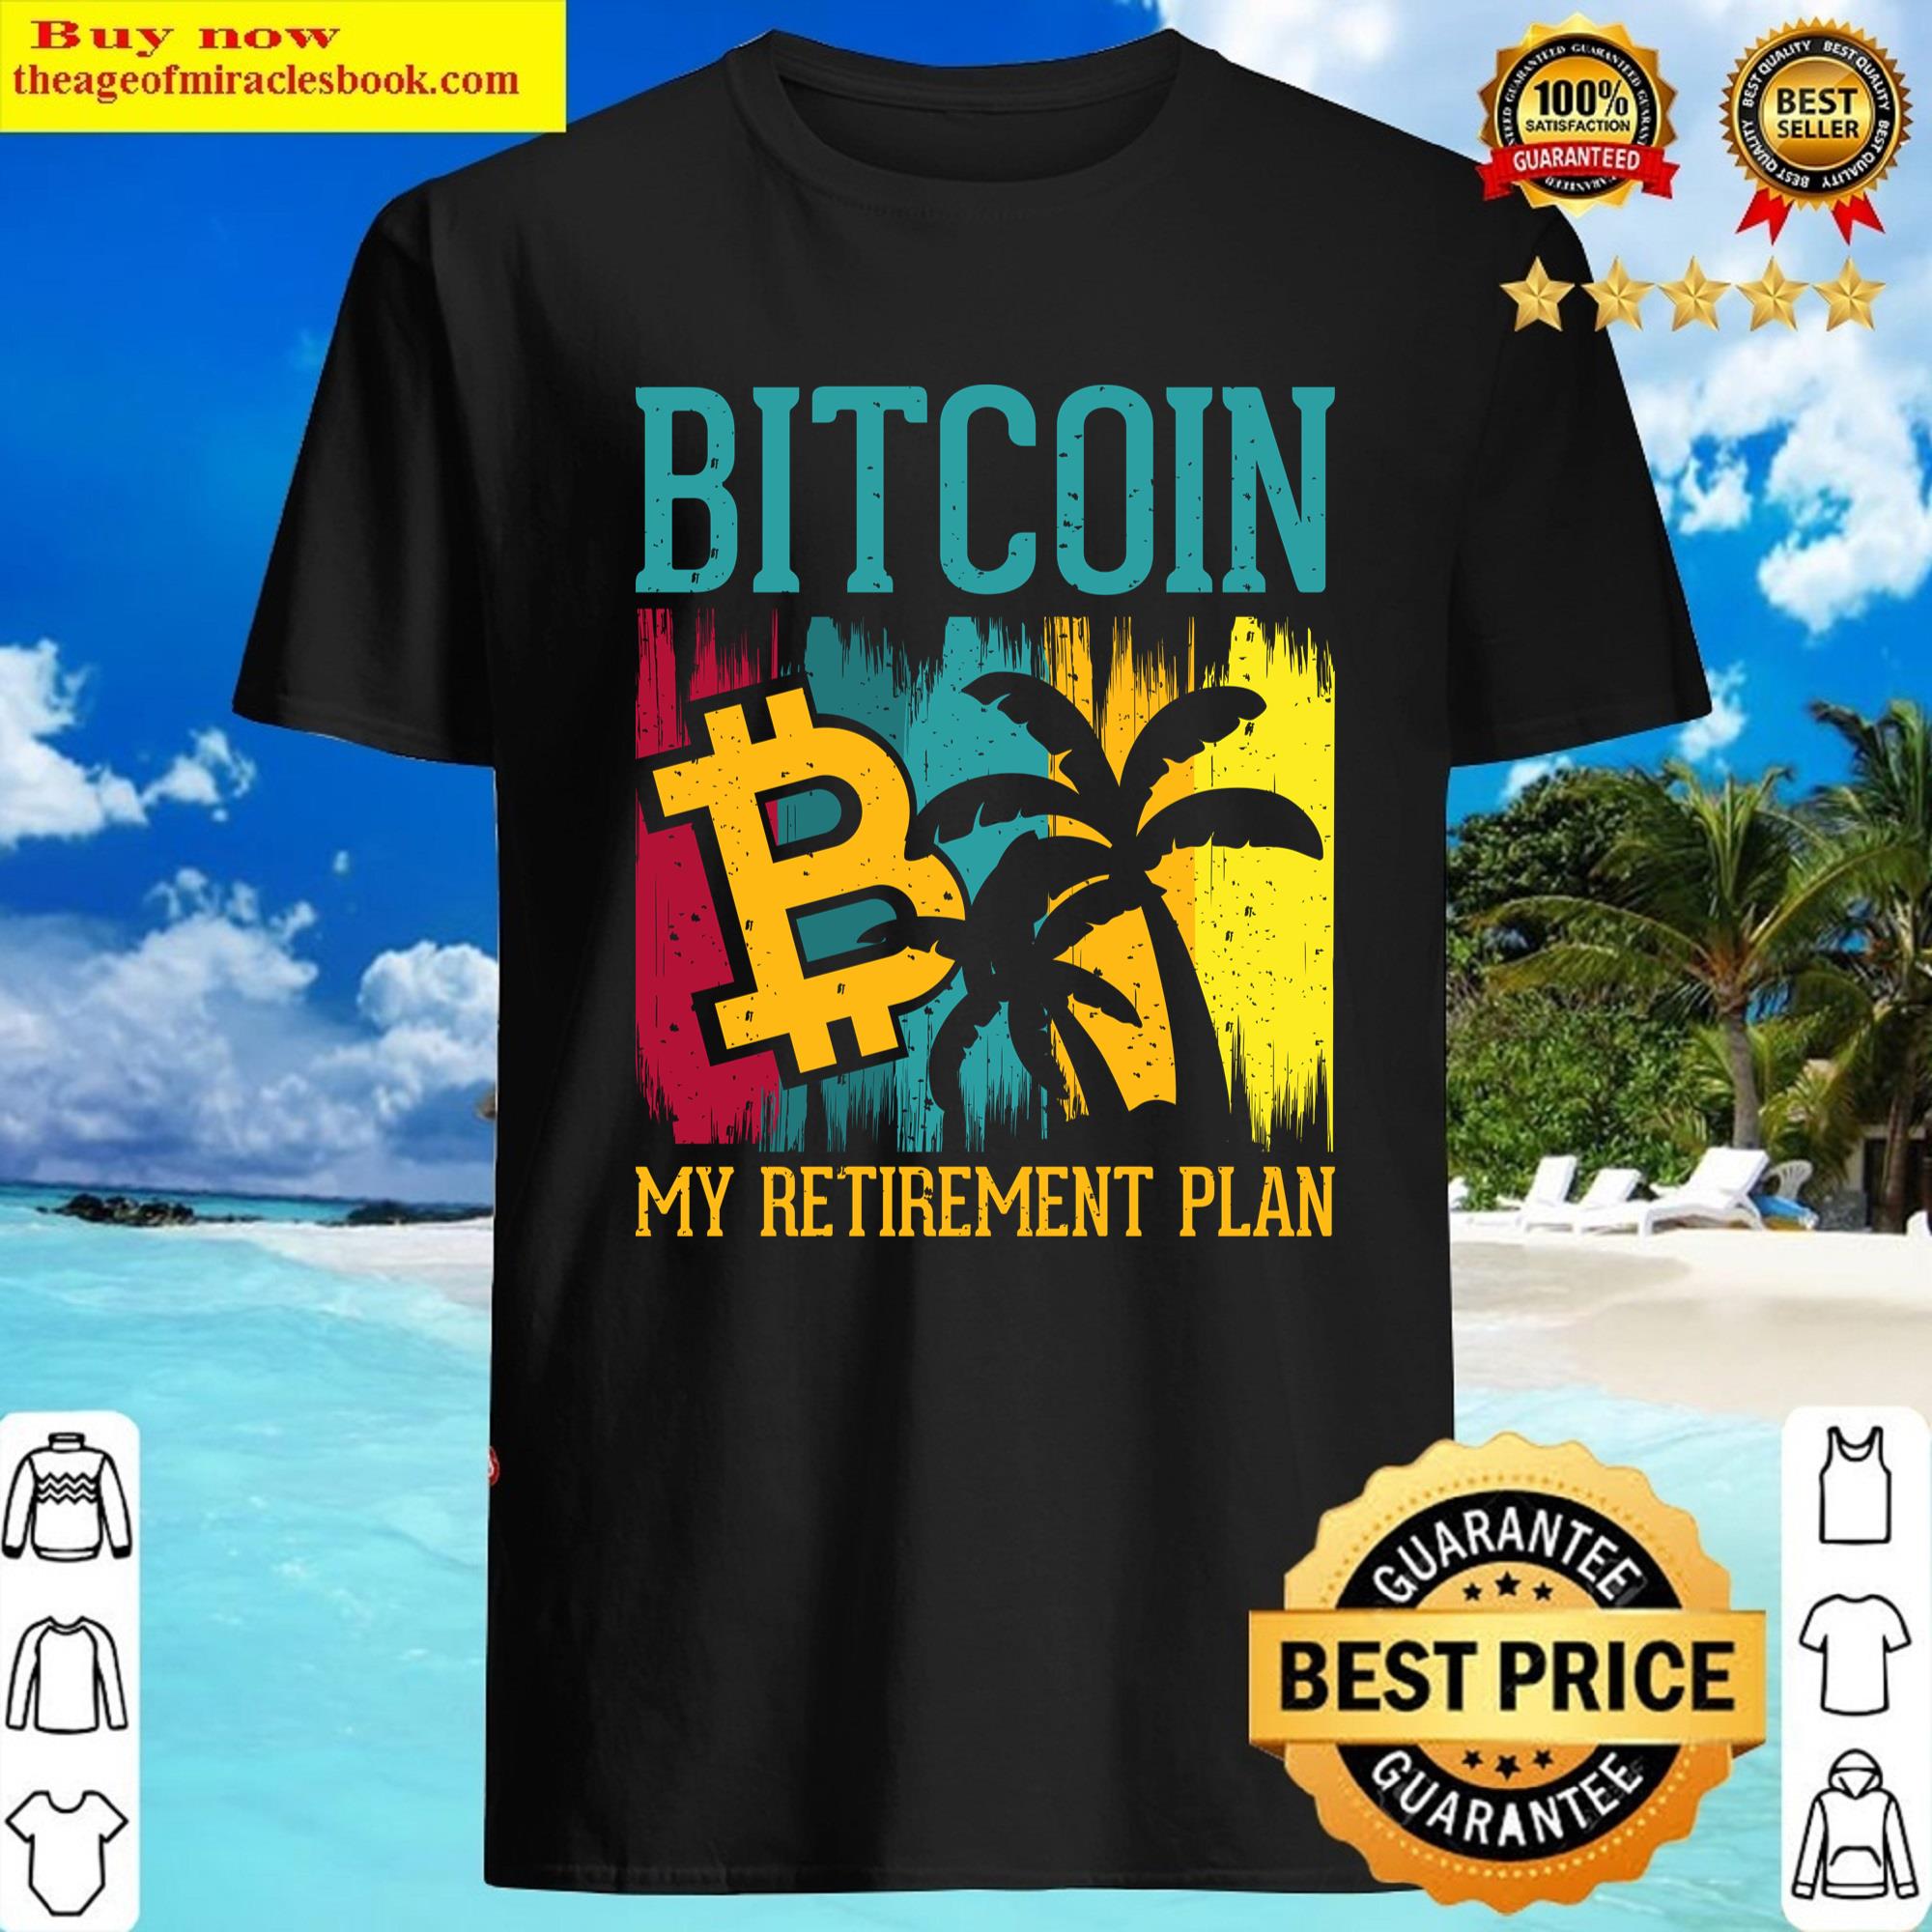 Bitcoin My Retirement Plan Shirt Shirt